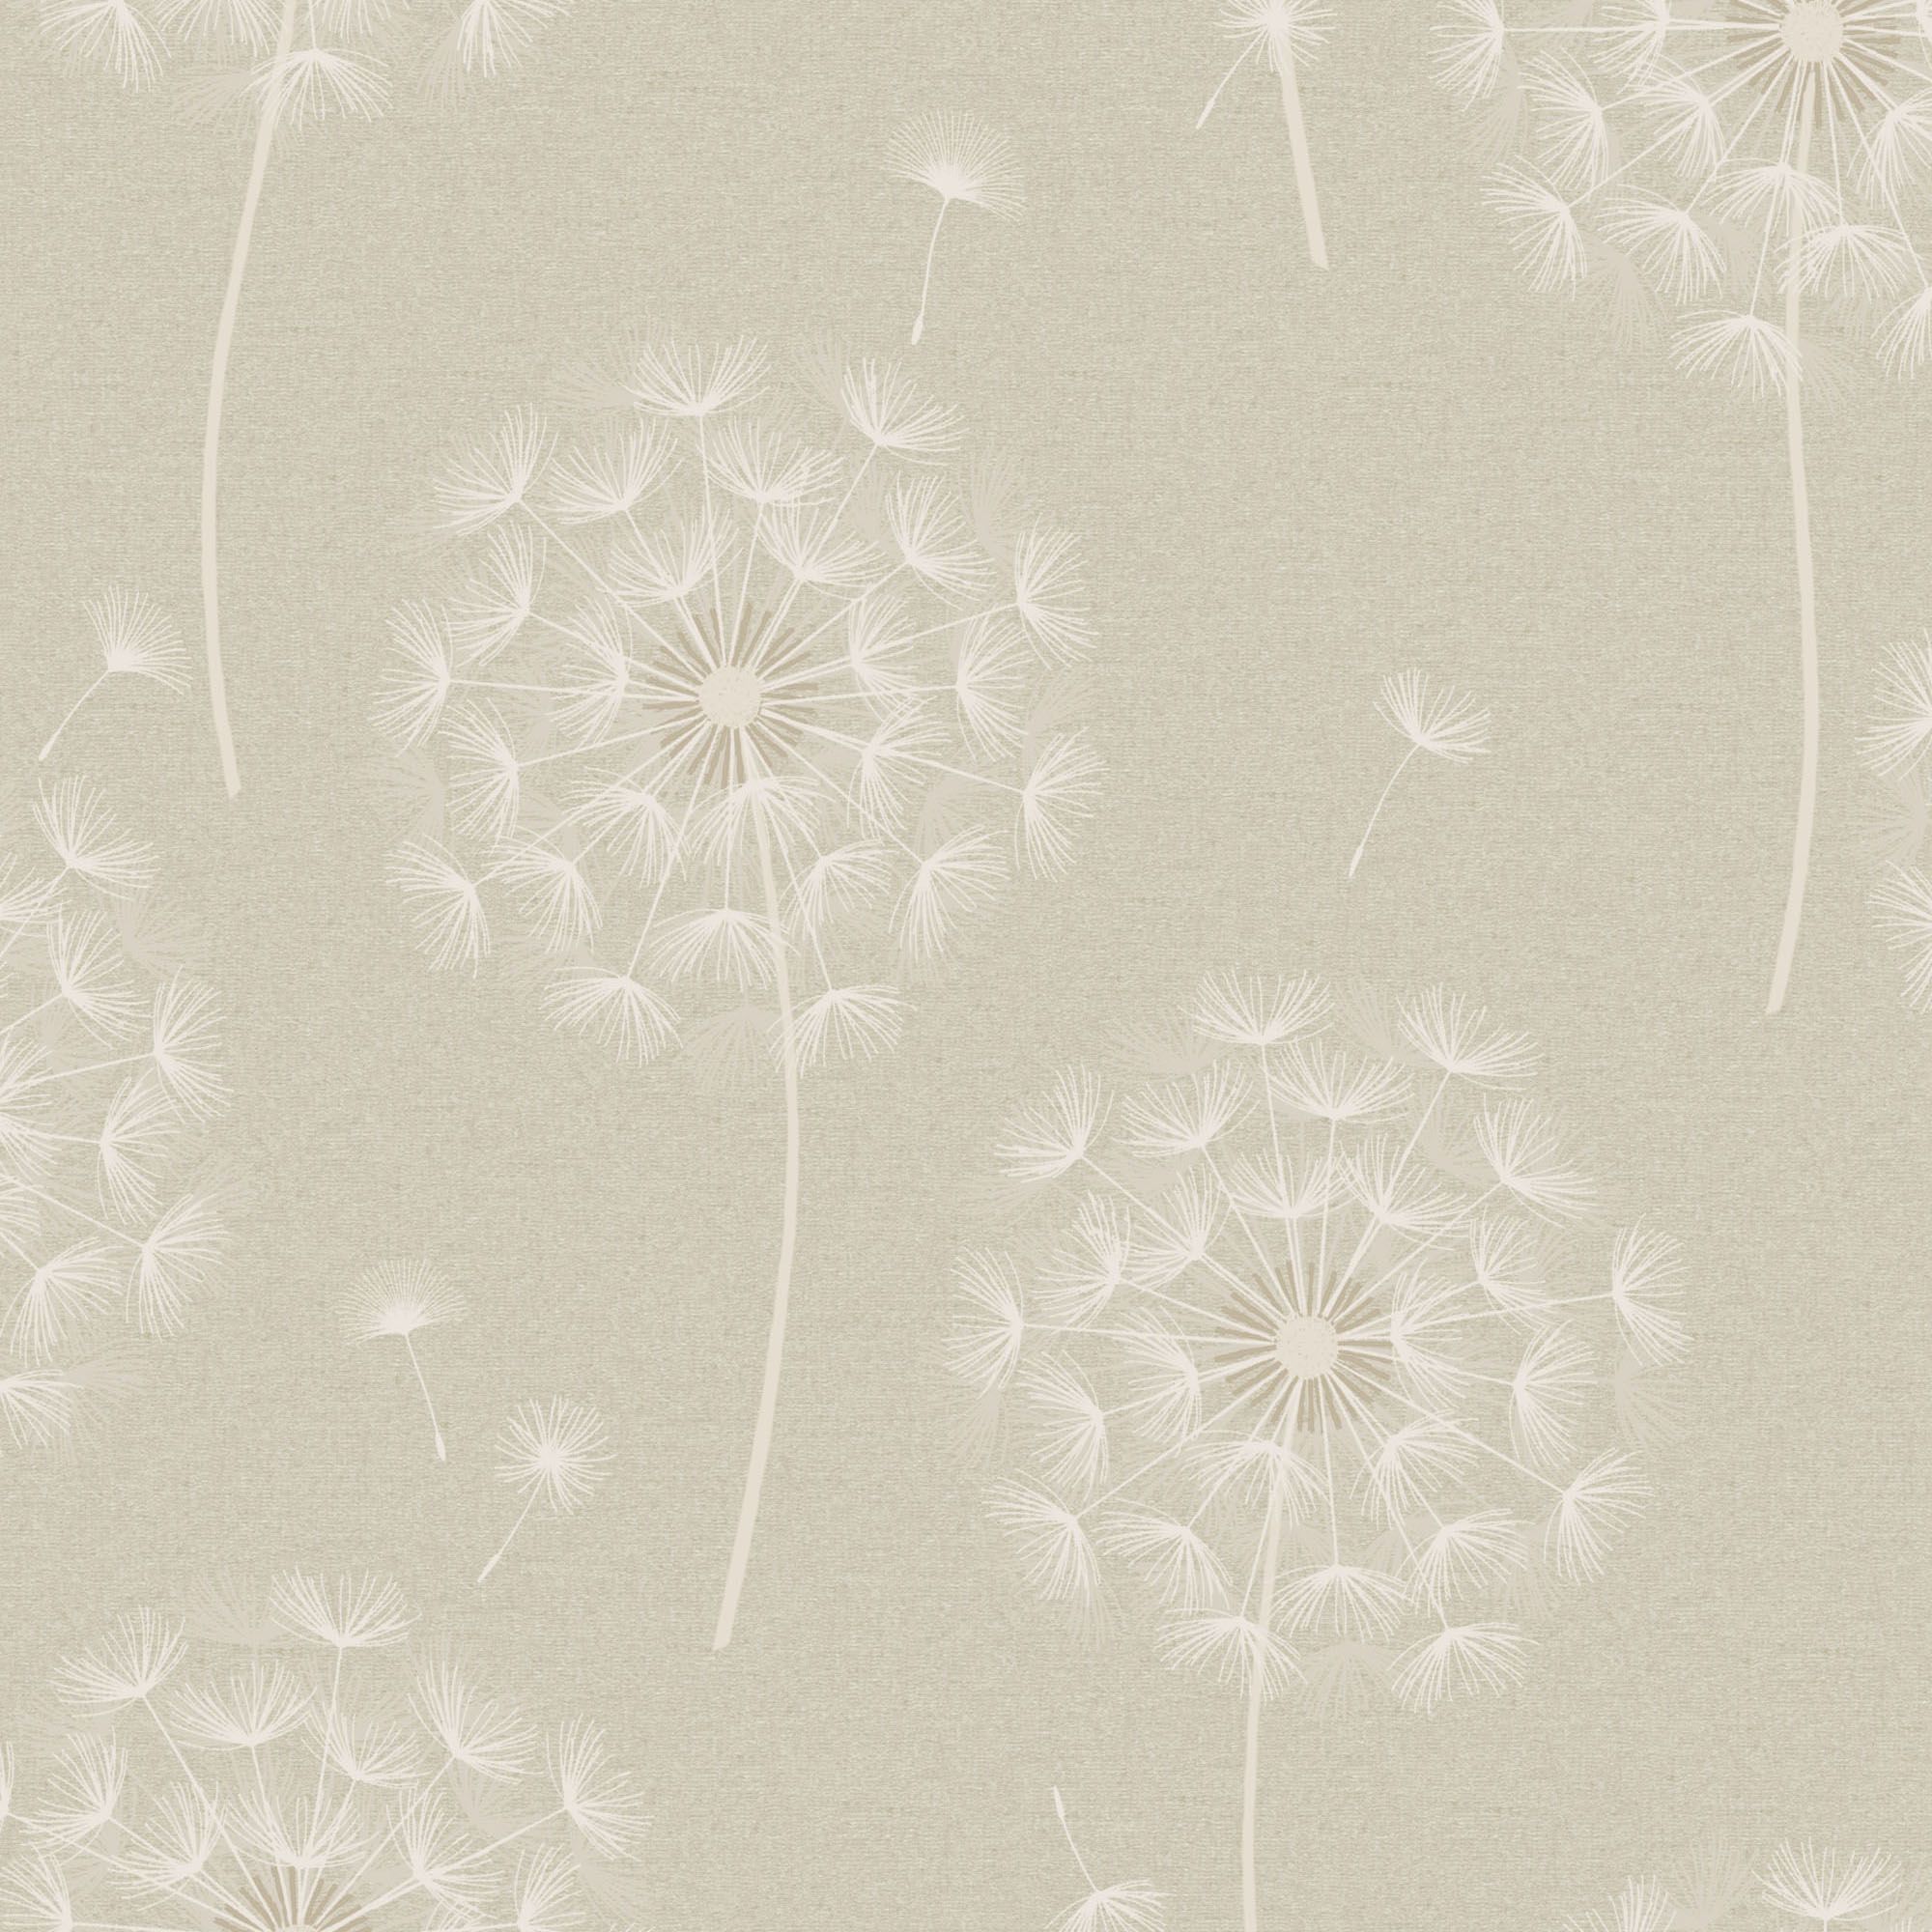 Holden Décor Opus Allora Cream Metallic effect Dandelion Embossed Wallpaper Sample